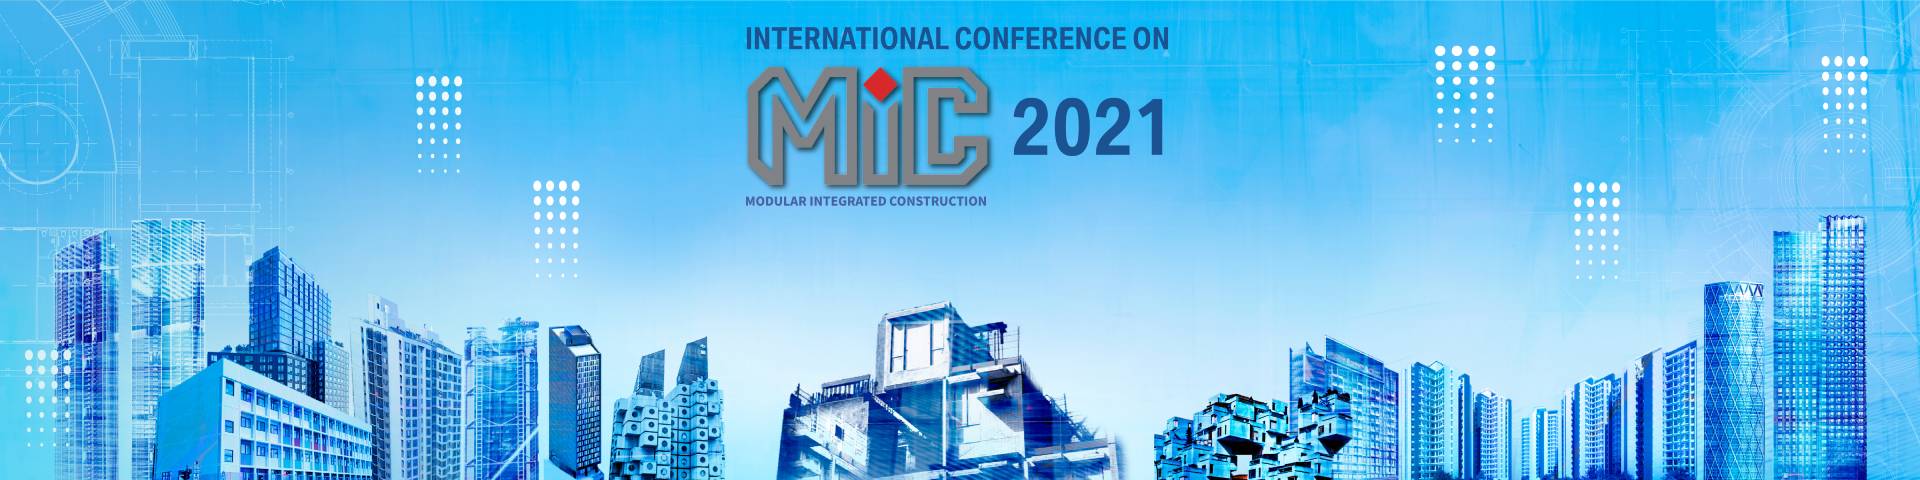 CIC MICConference2021 backdrop_v8-02_Cut.jpg